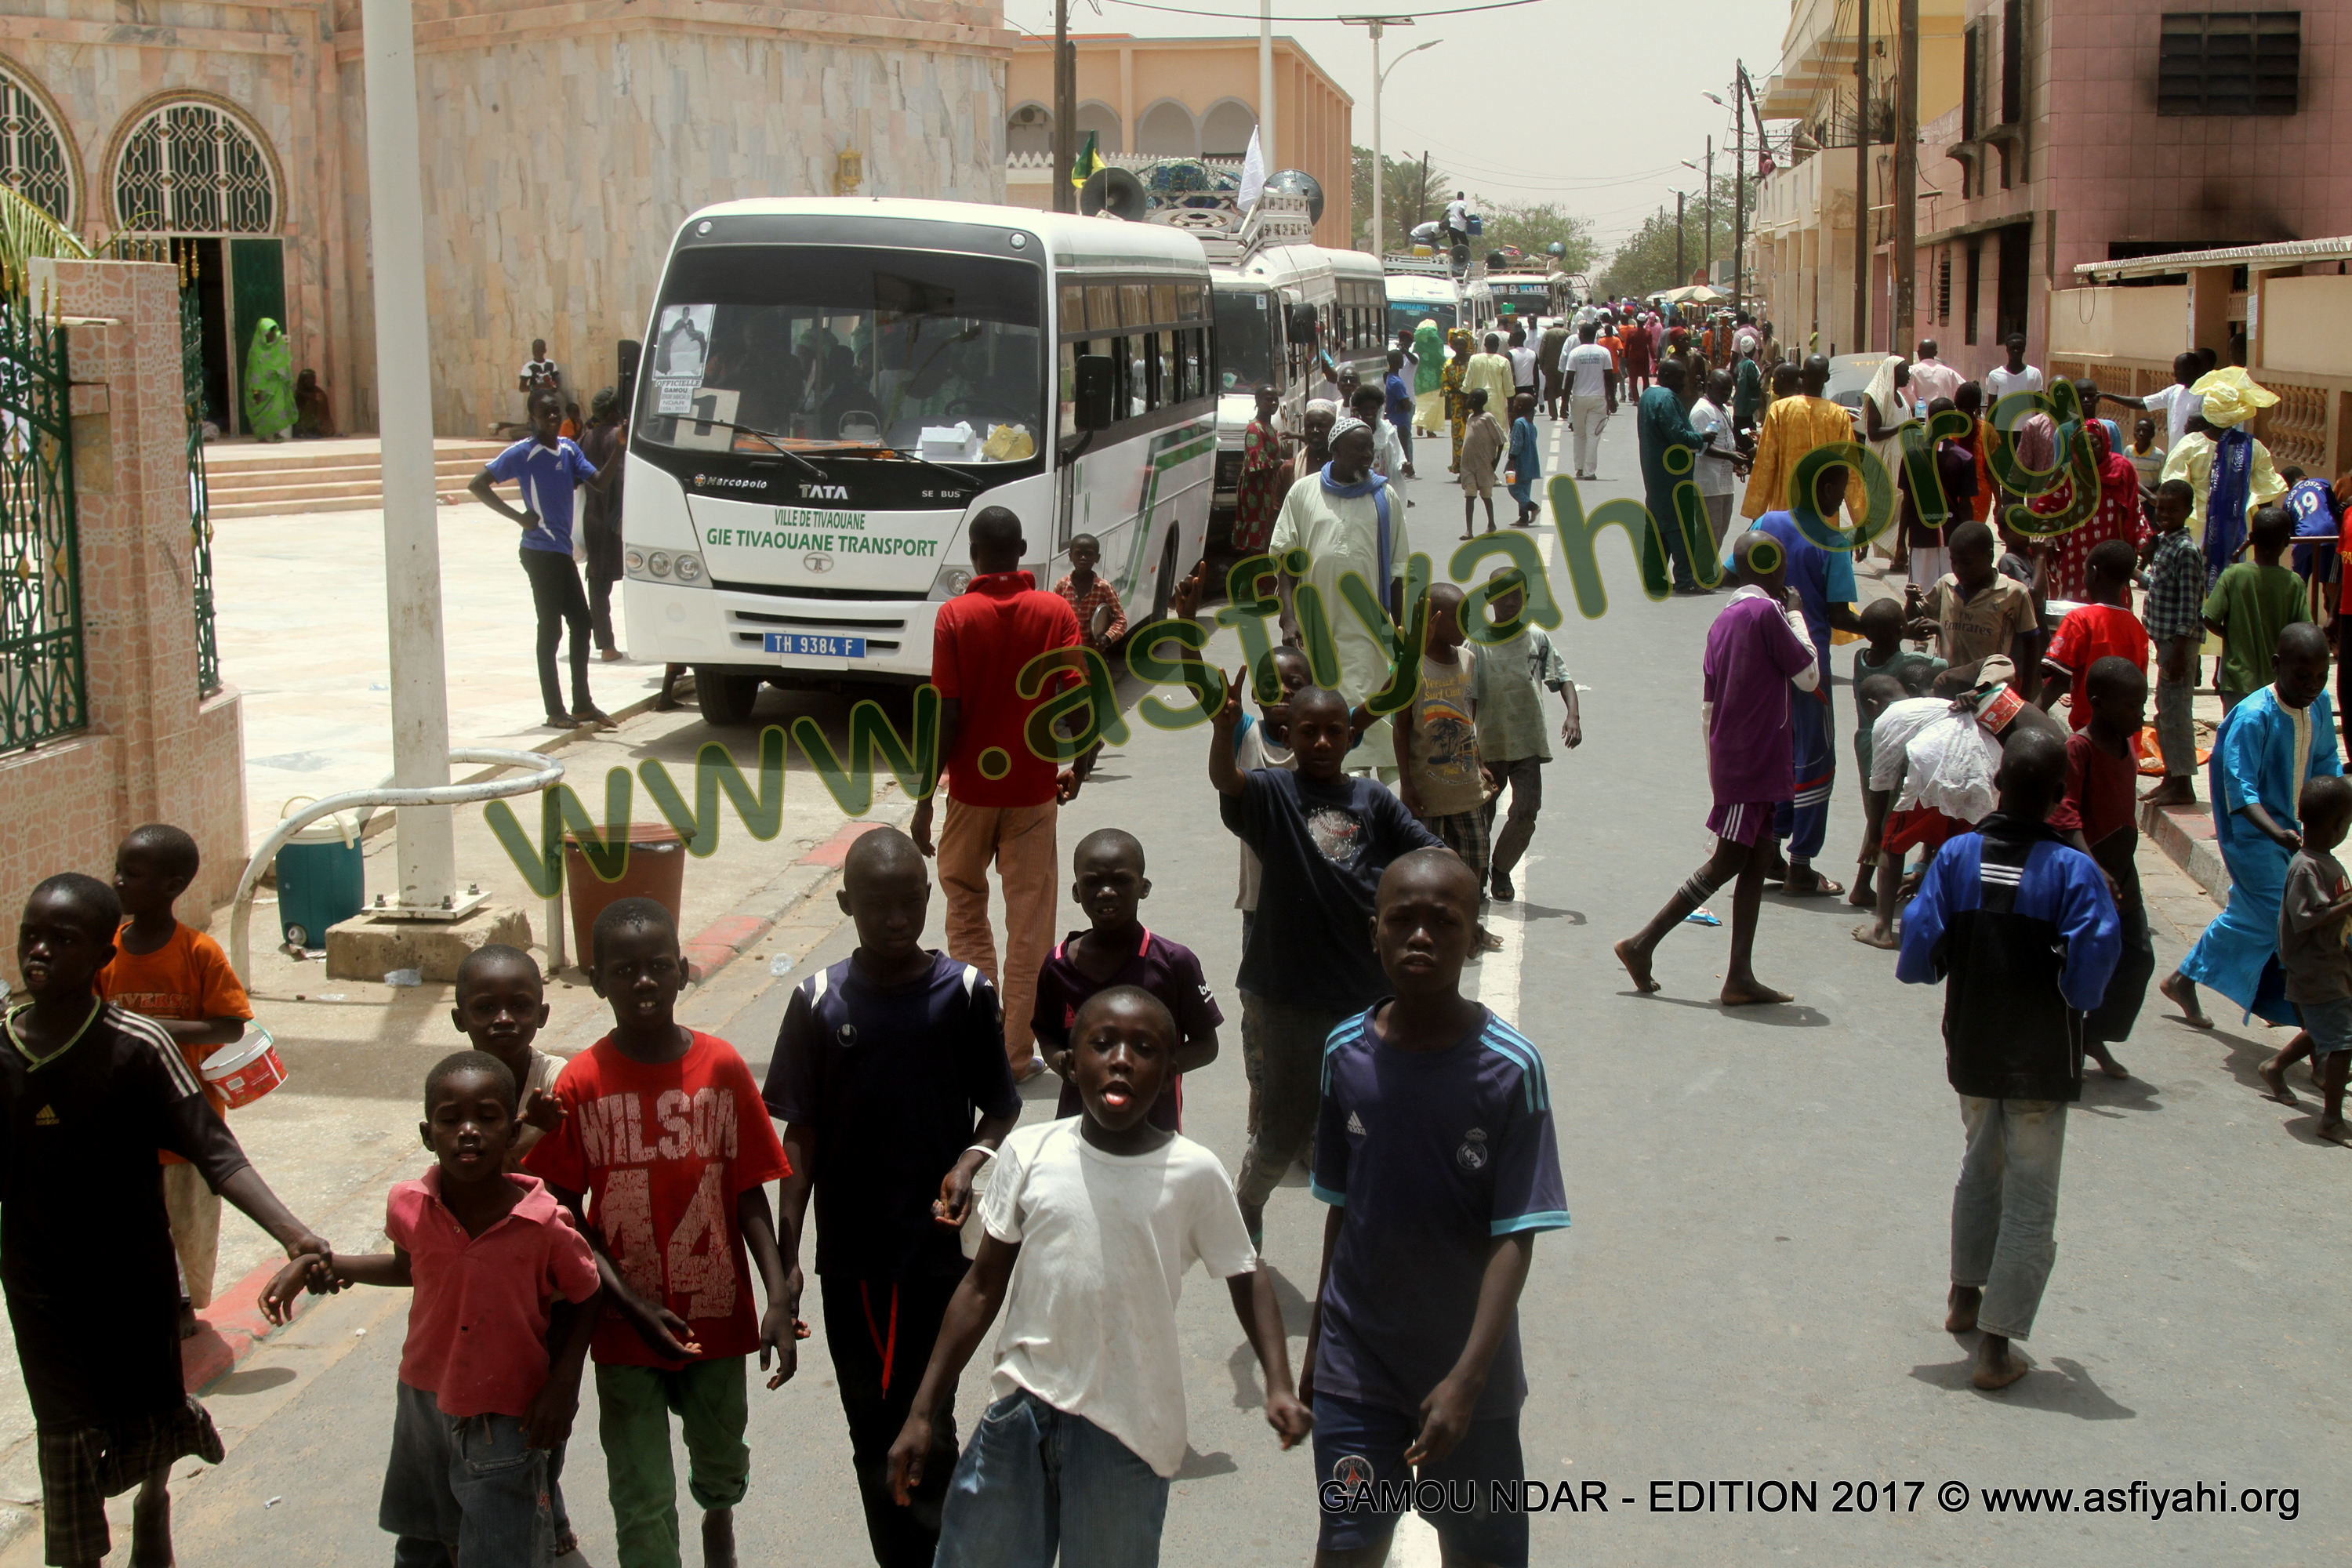 PHOTOS - Gamou Ndar 2017: Les temps-forts du Convoi Dakar - Tivaouane - Saint-Louis